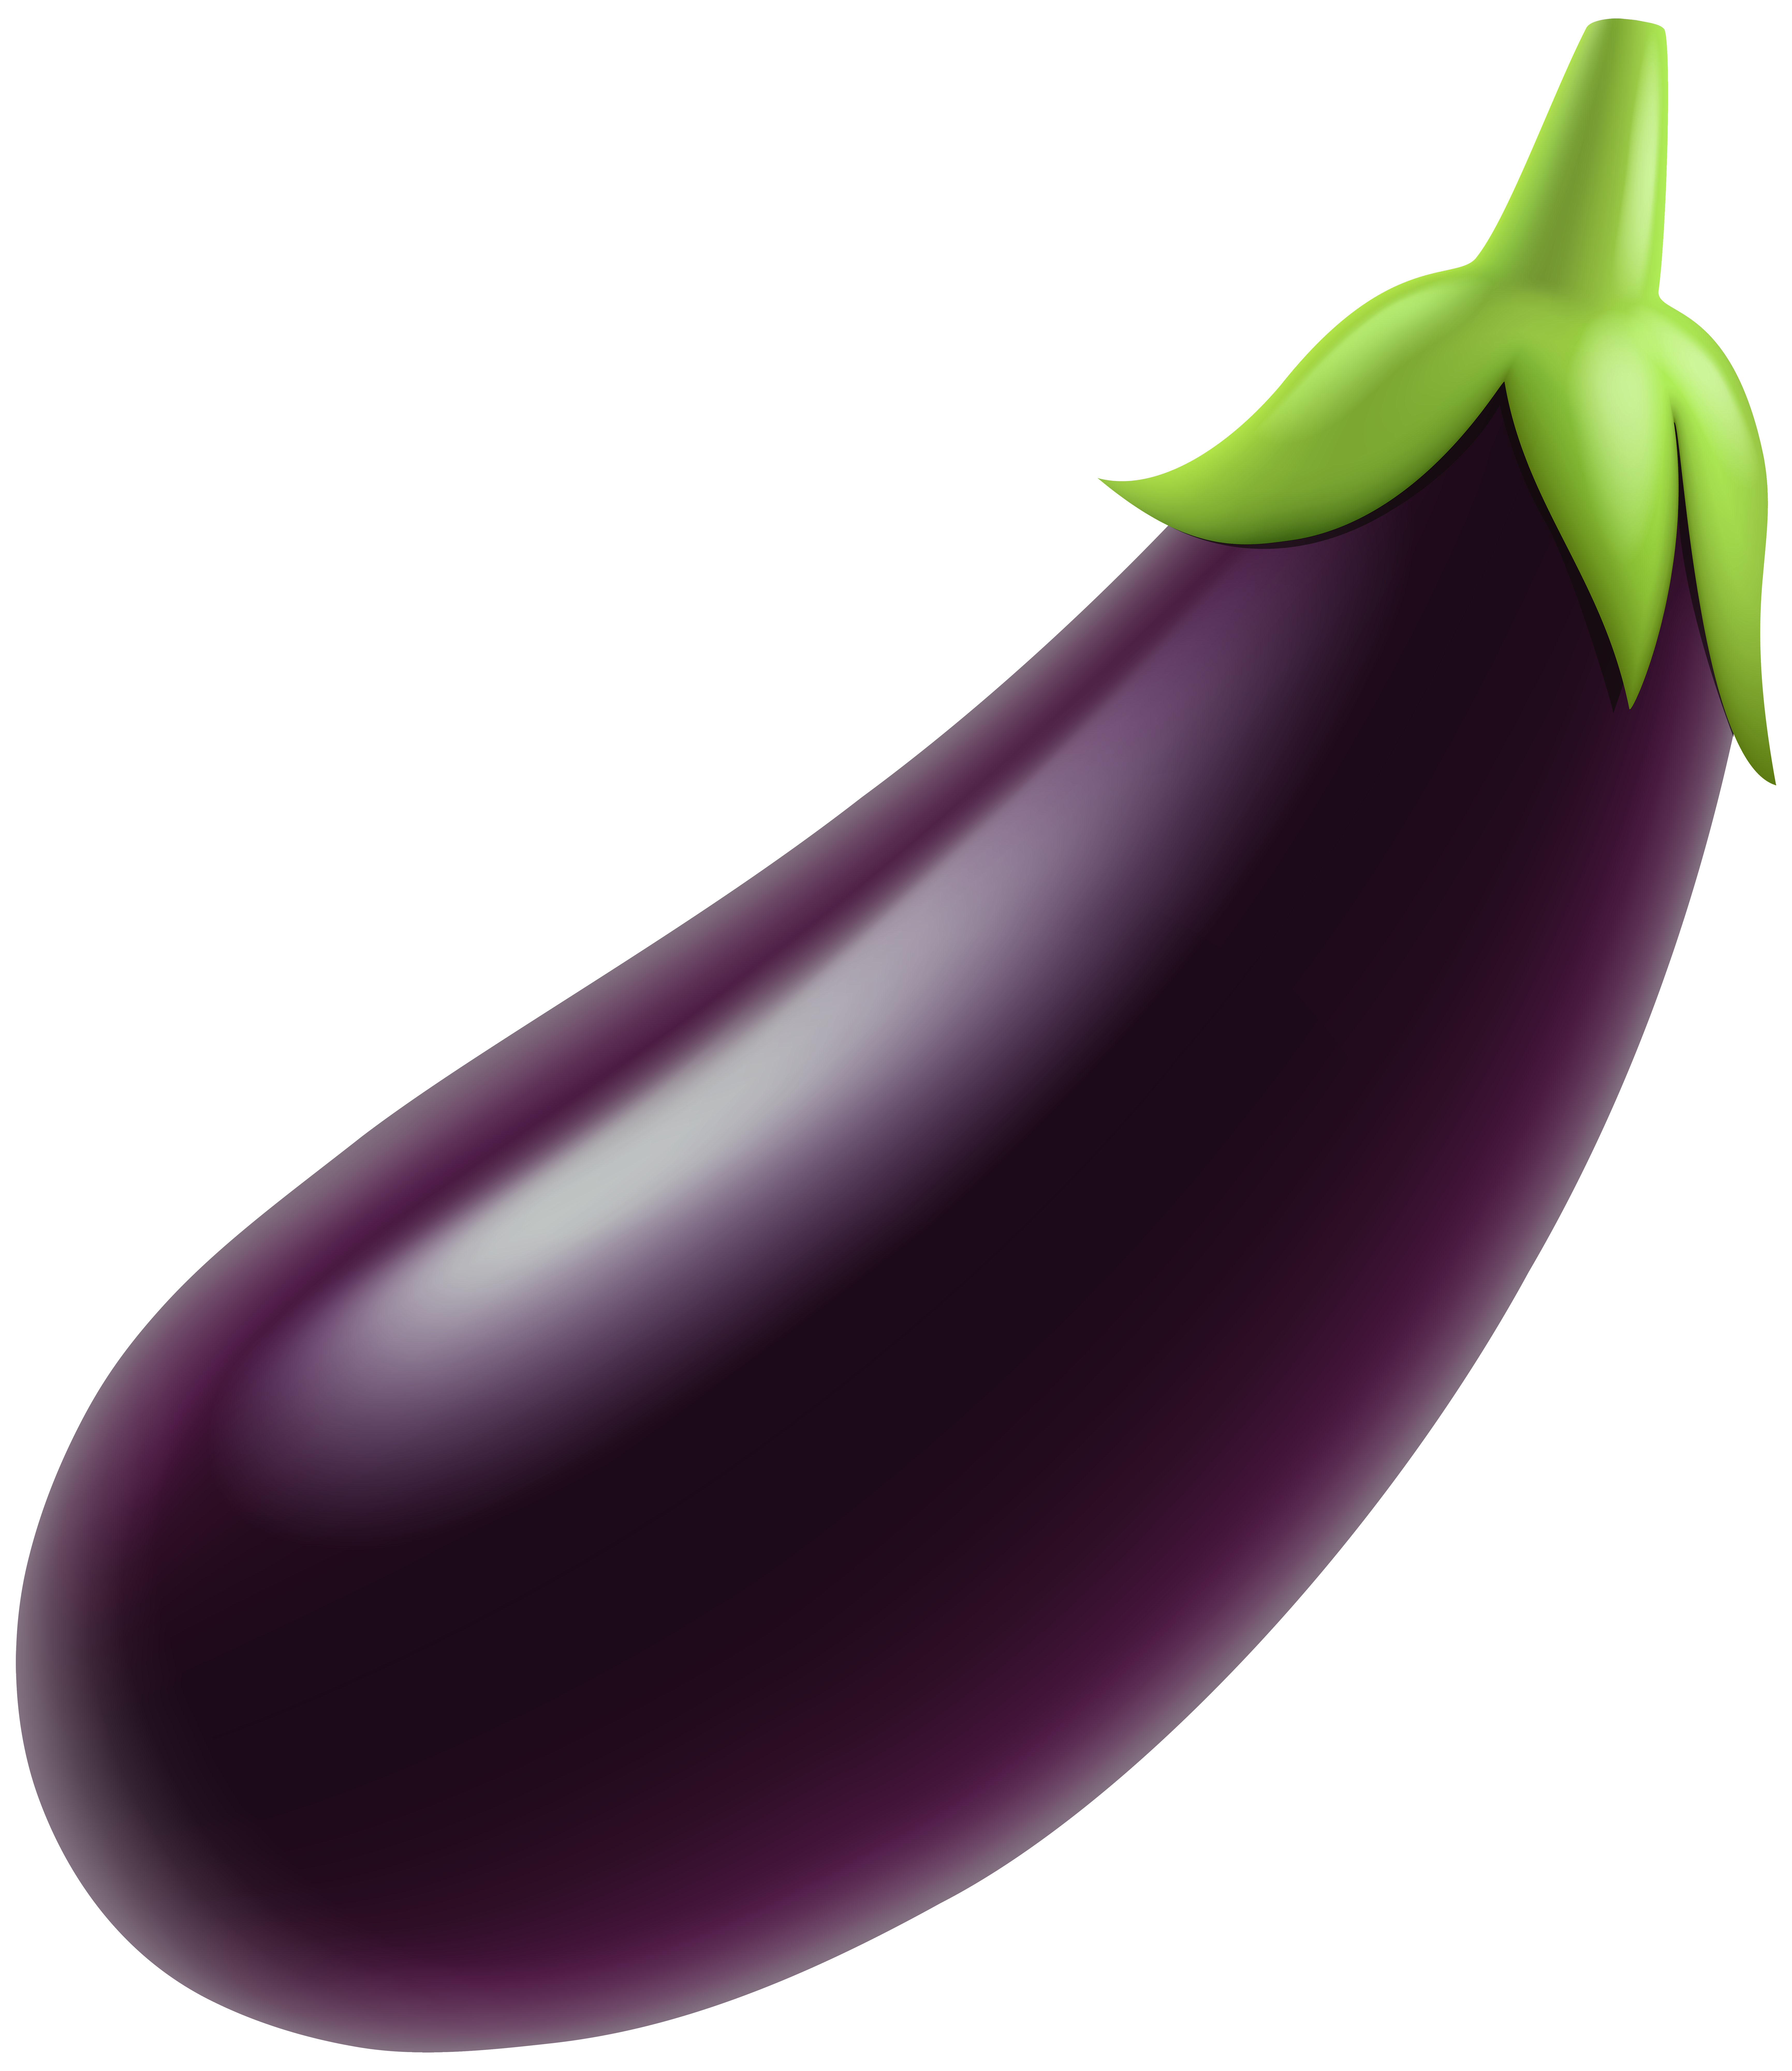 Eggplant Vegetable Clip Art Eggplant Png Download 69248000 Free